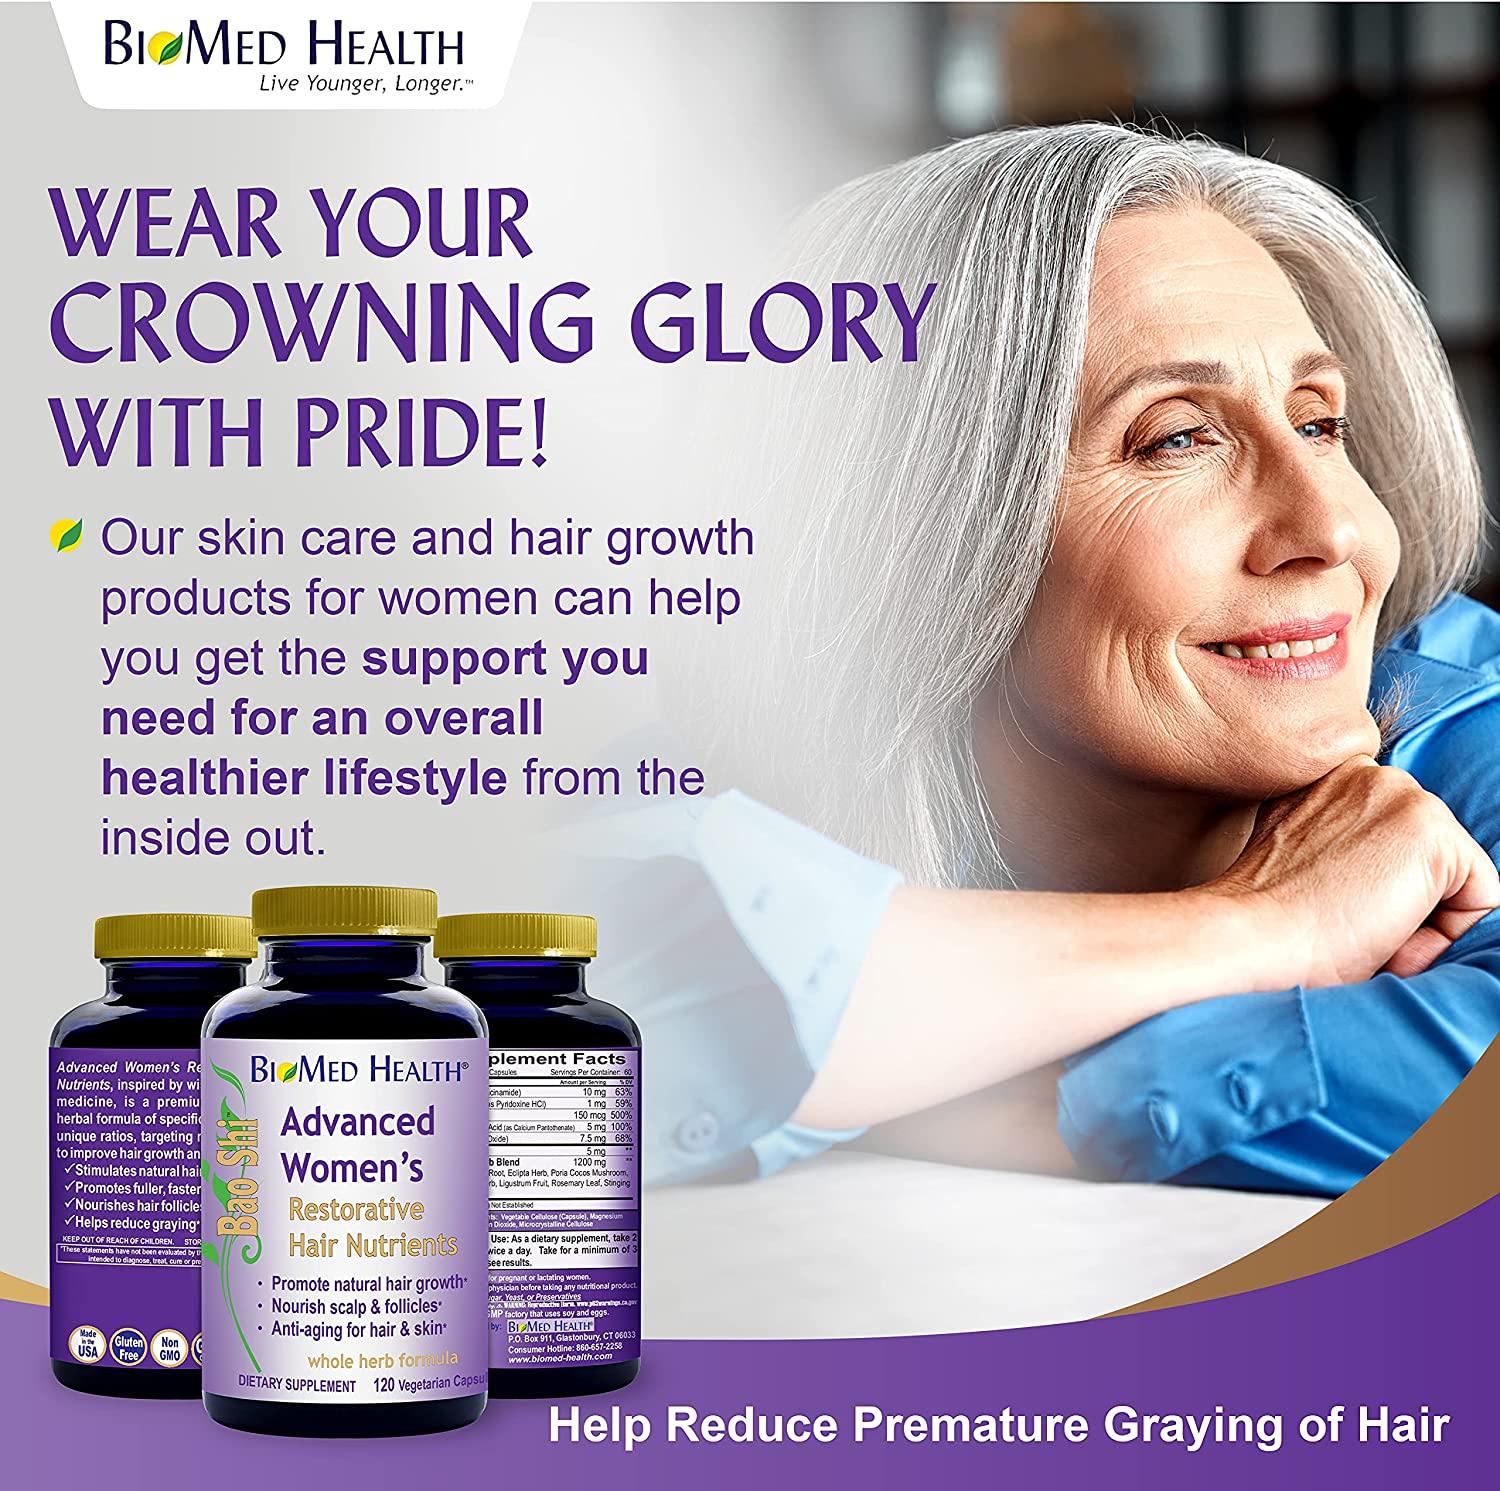 BioMed Health Hair Growth Vitamins for Women 120ct - Advanced Restorative Hair  Nutrients, Promotes Hair Regrowth and Anti-Gray Hair